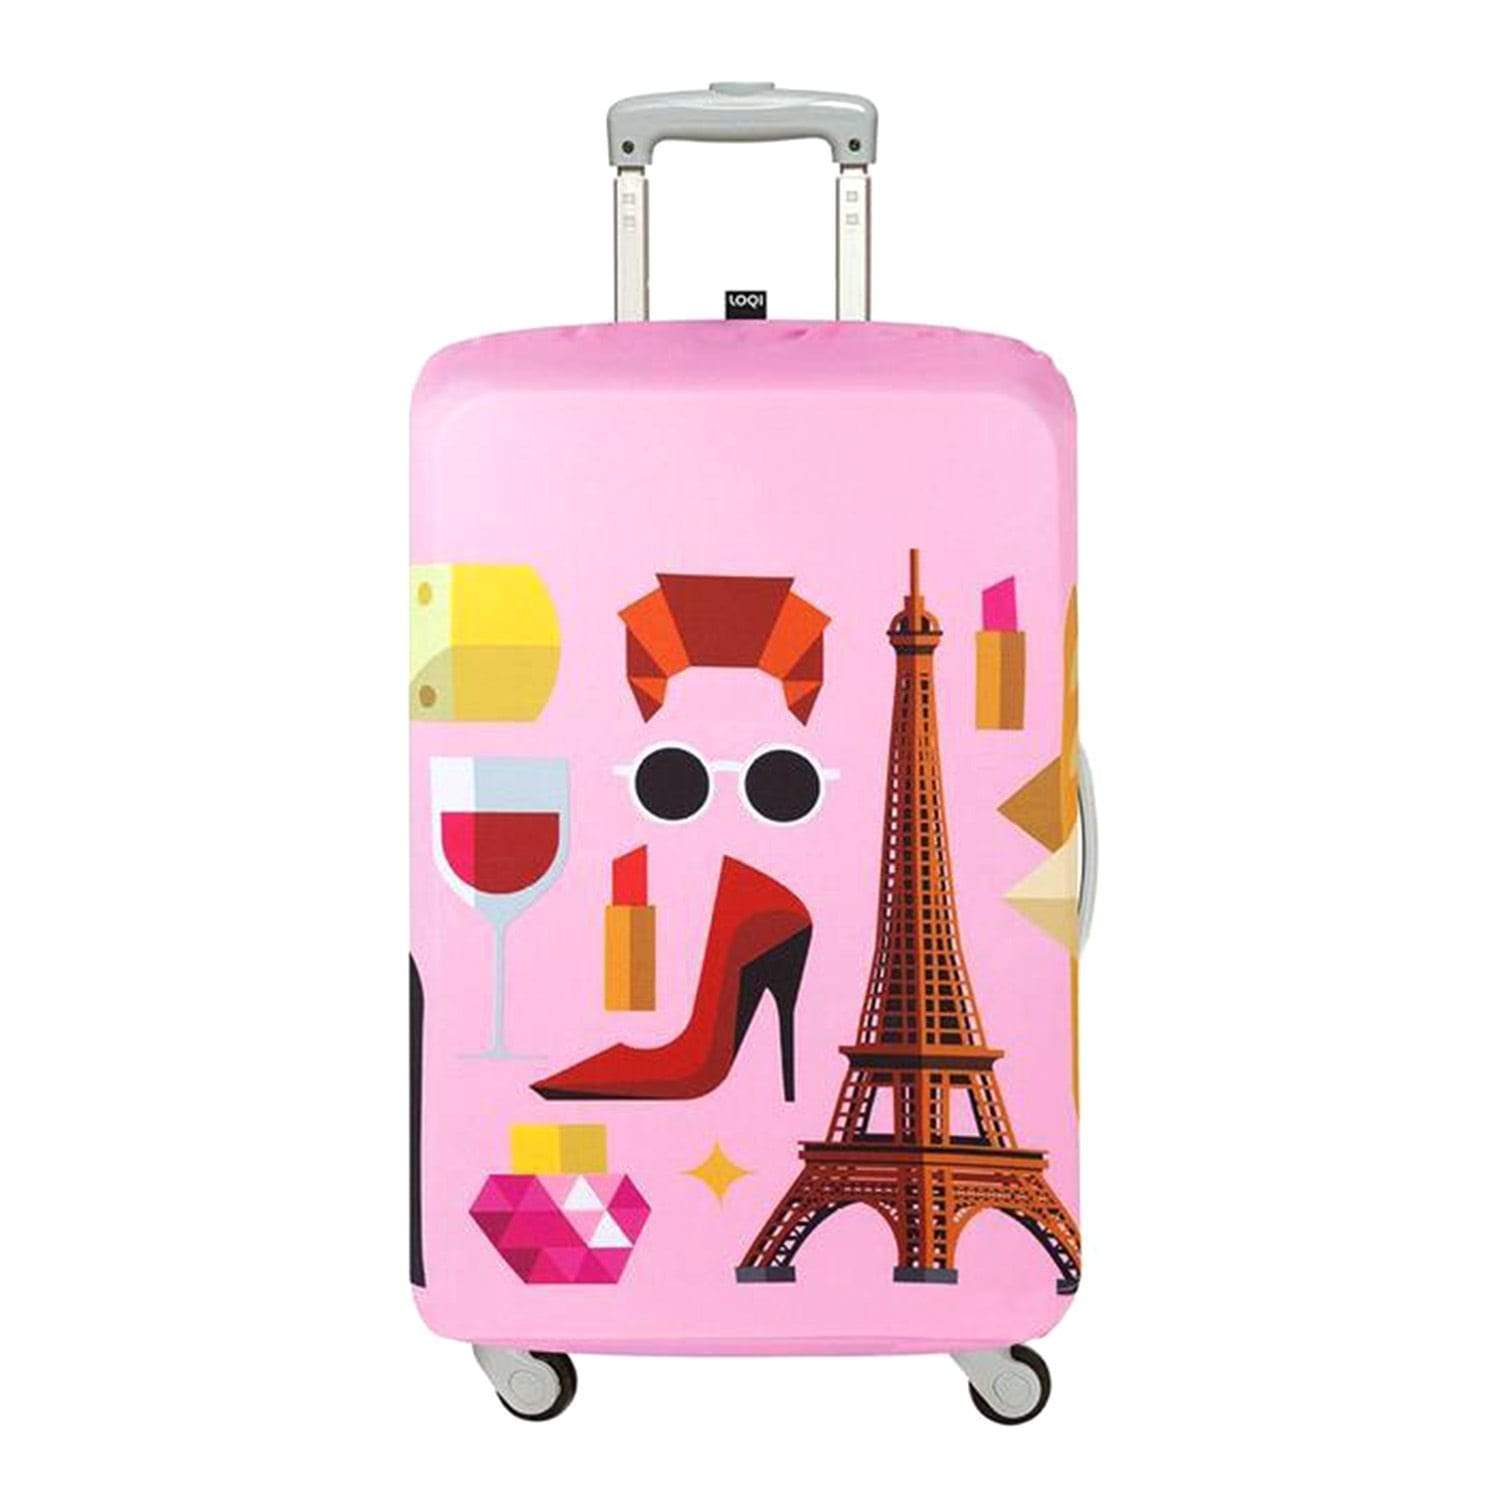 Loqi Artist Hey Studio Paris Luggage Cover - Pink, Small - LS.HEY.PA - Jashanmal Home